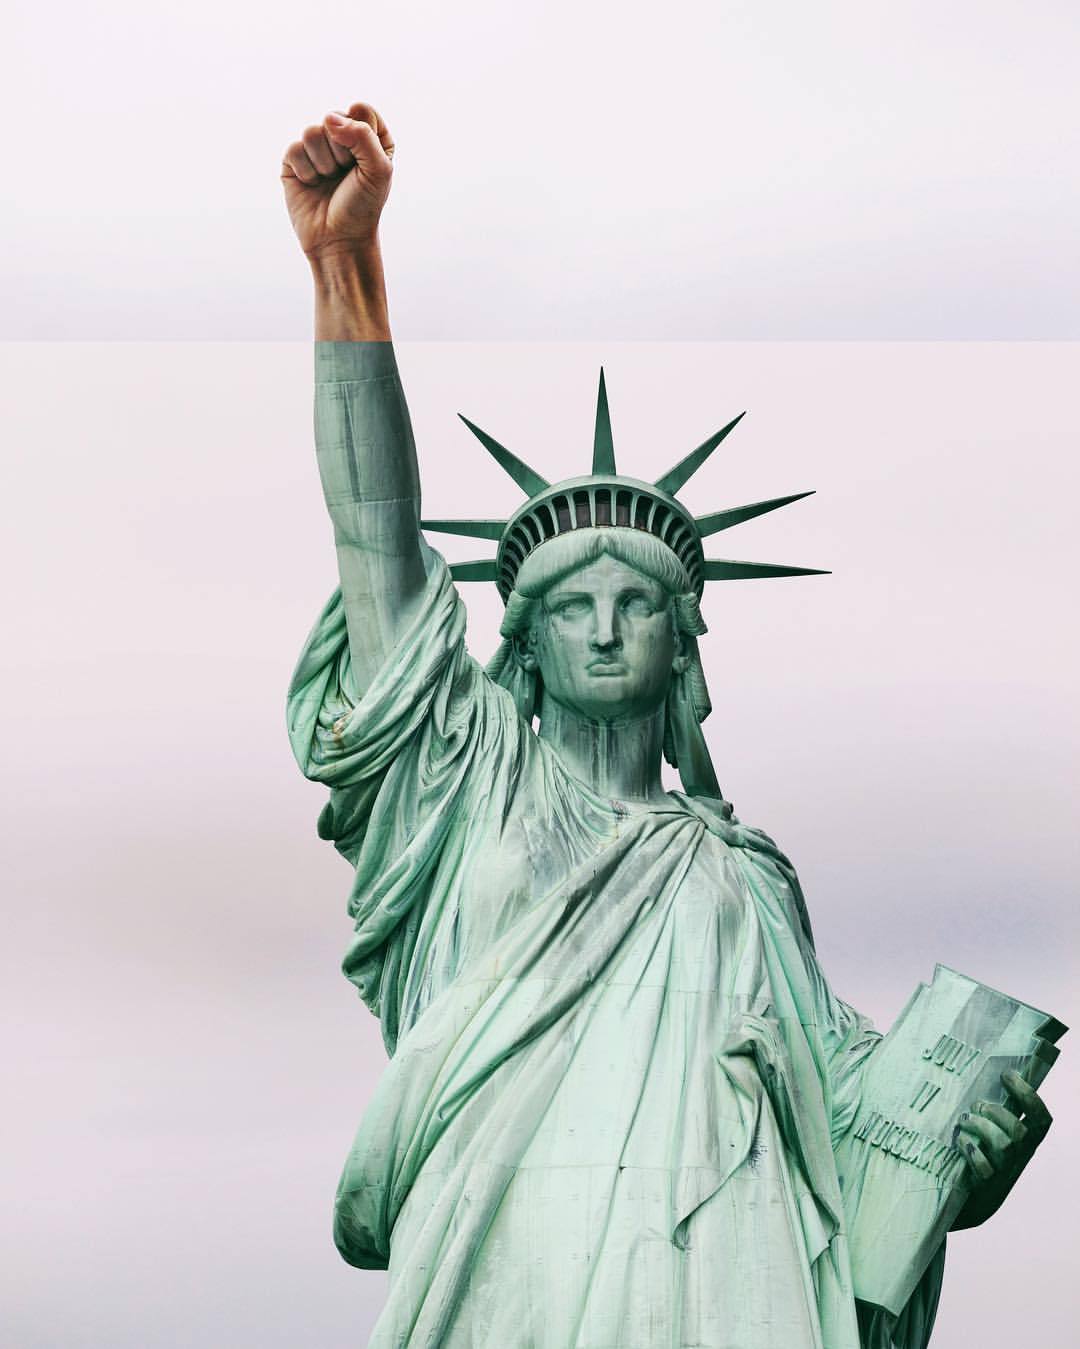 fist + Statue of Liberty
#combophoto #nyc